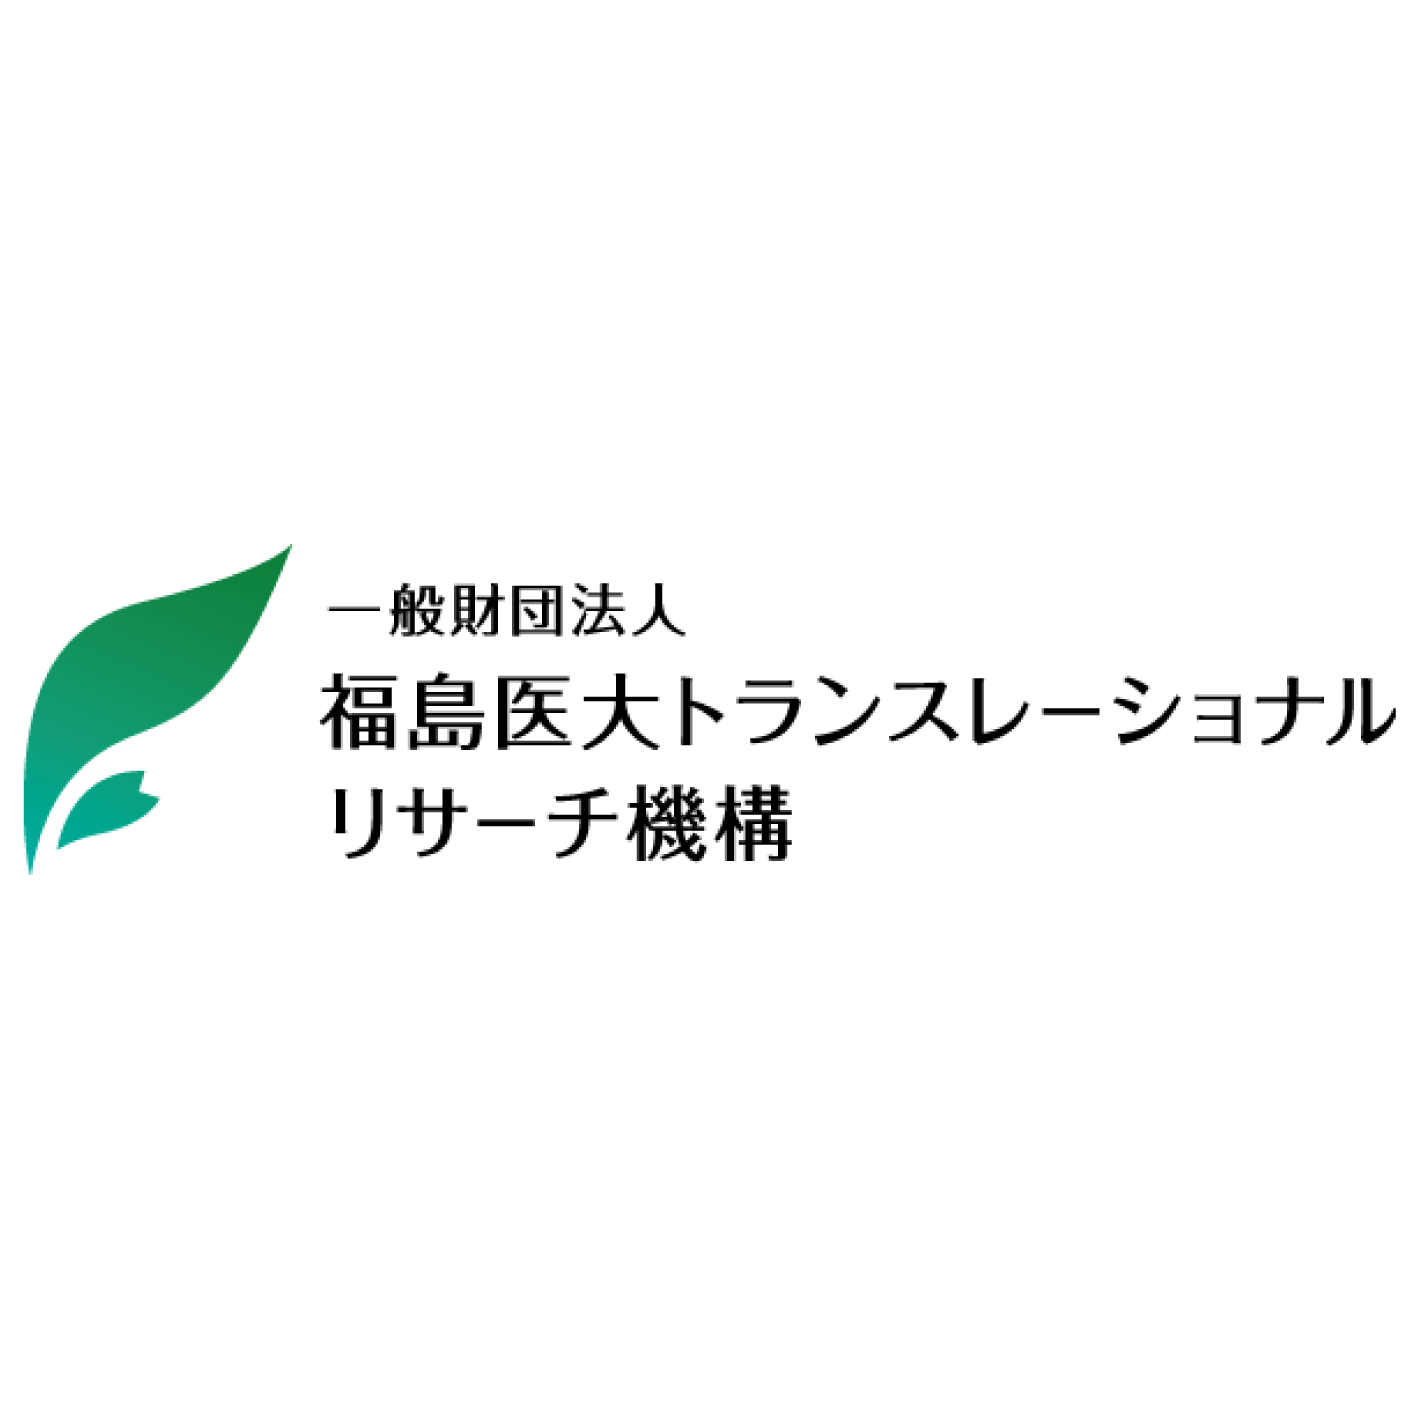 Fukushima Translational Research Foundation